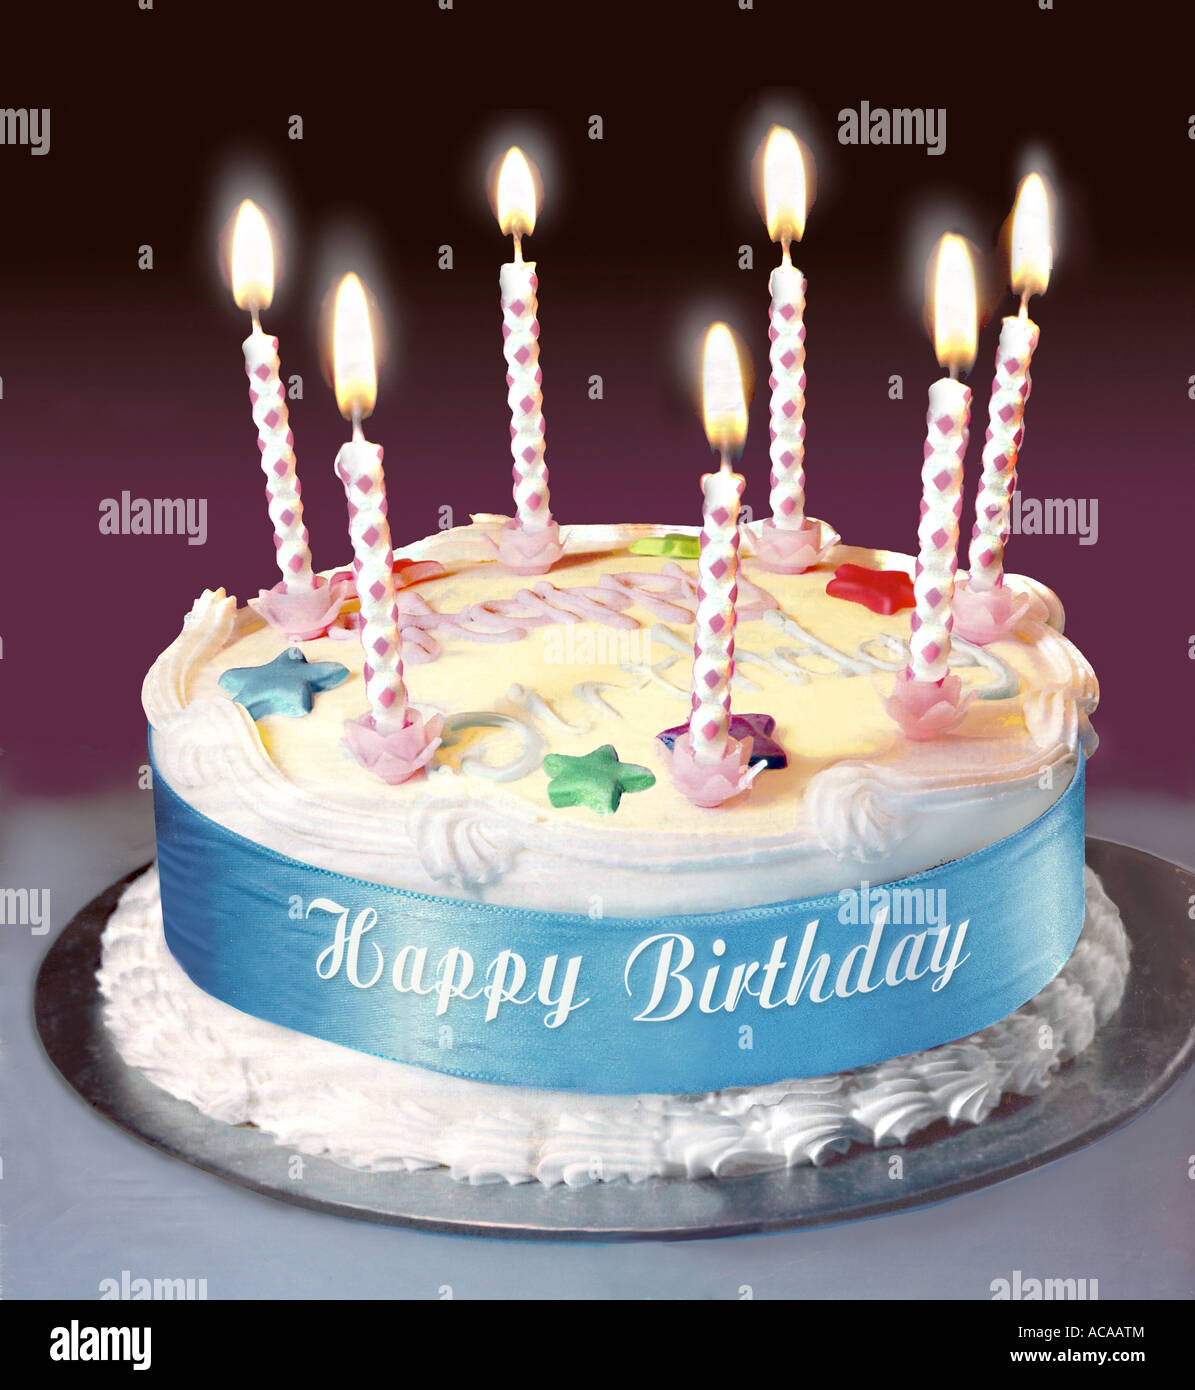 Happy Birthday Cake with candles Stock Photo - Alamy